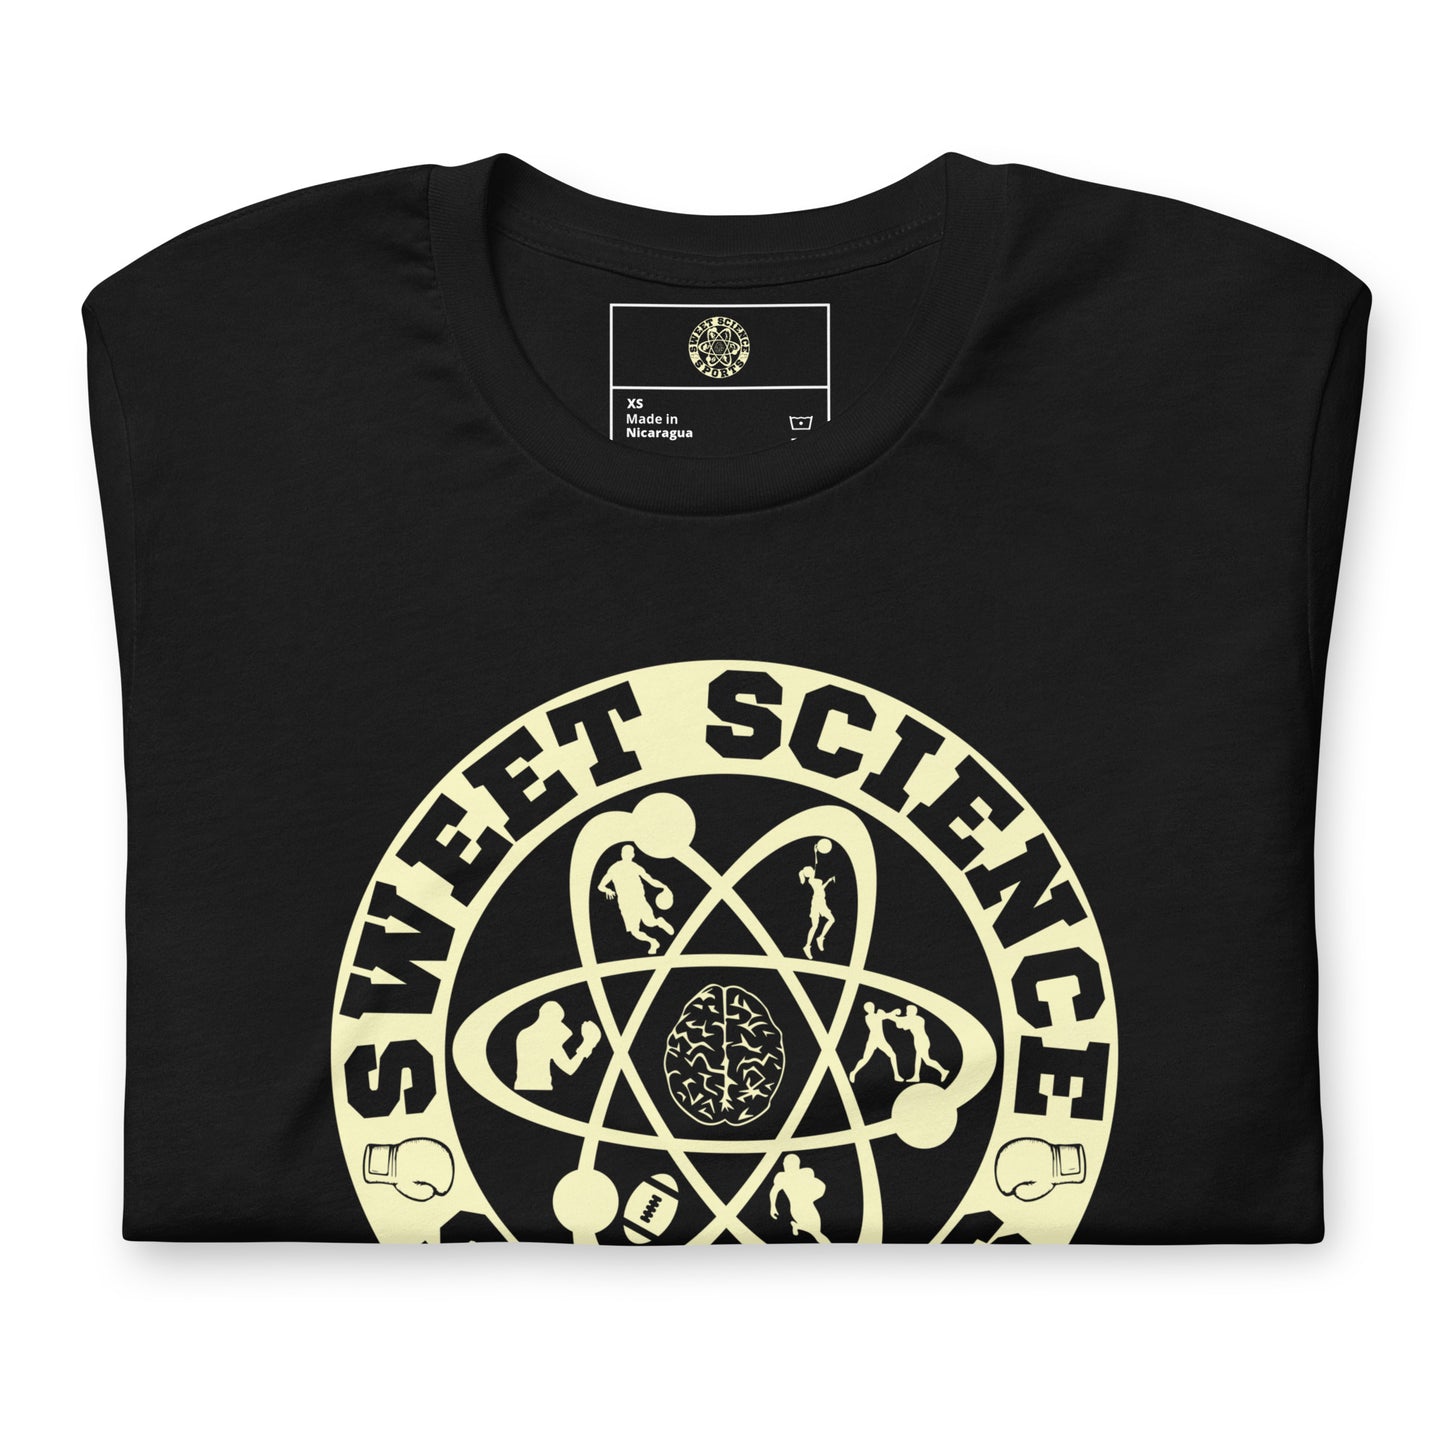 Sweet Science Sports  t-shirt